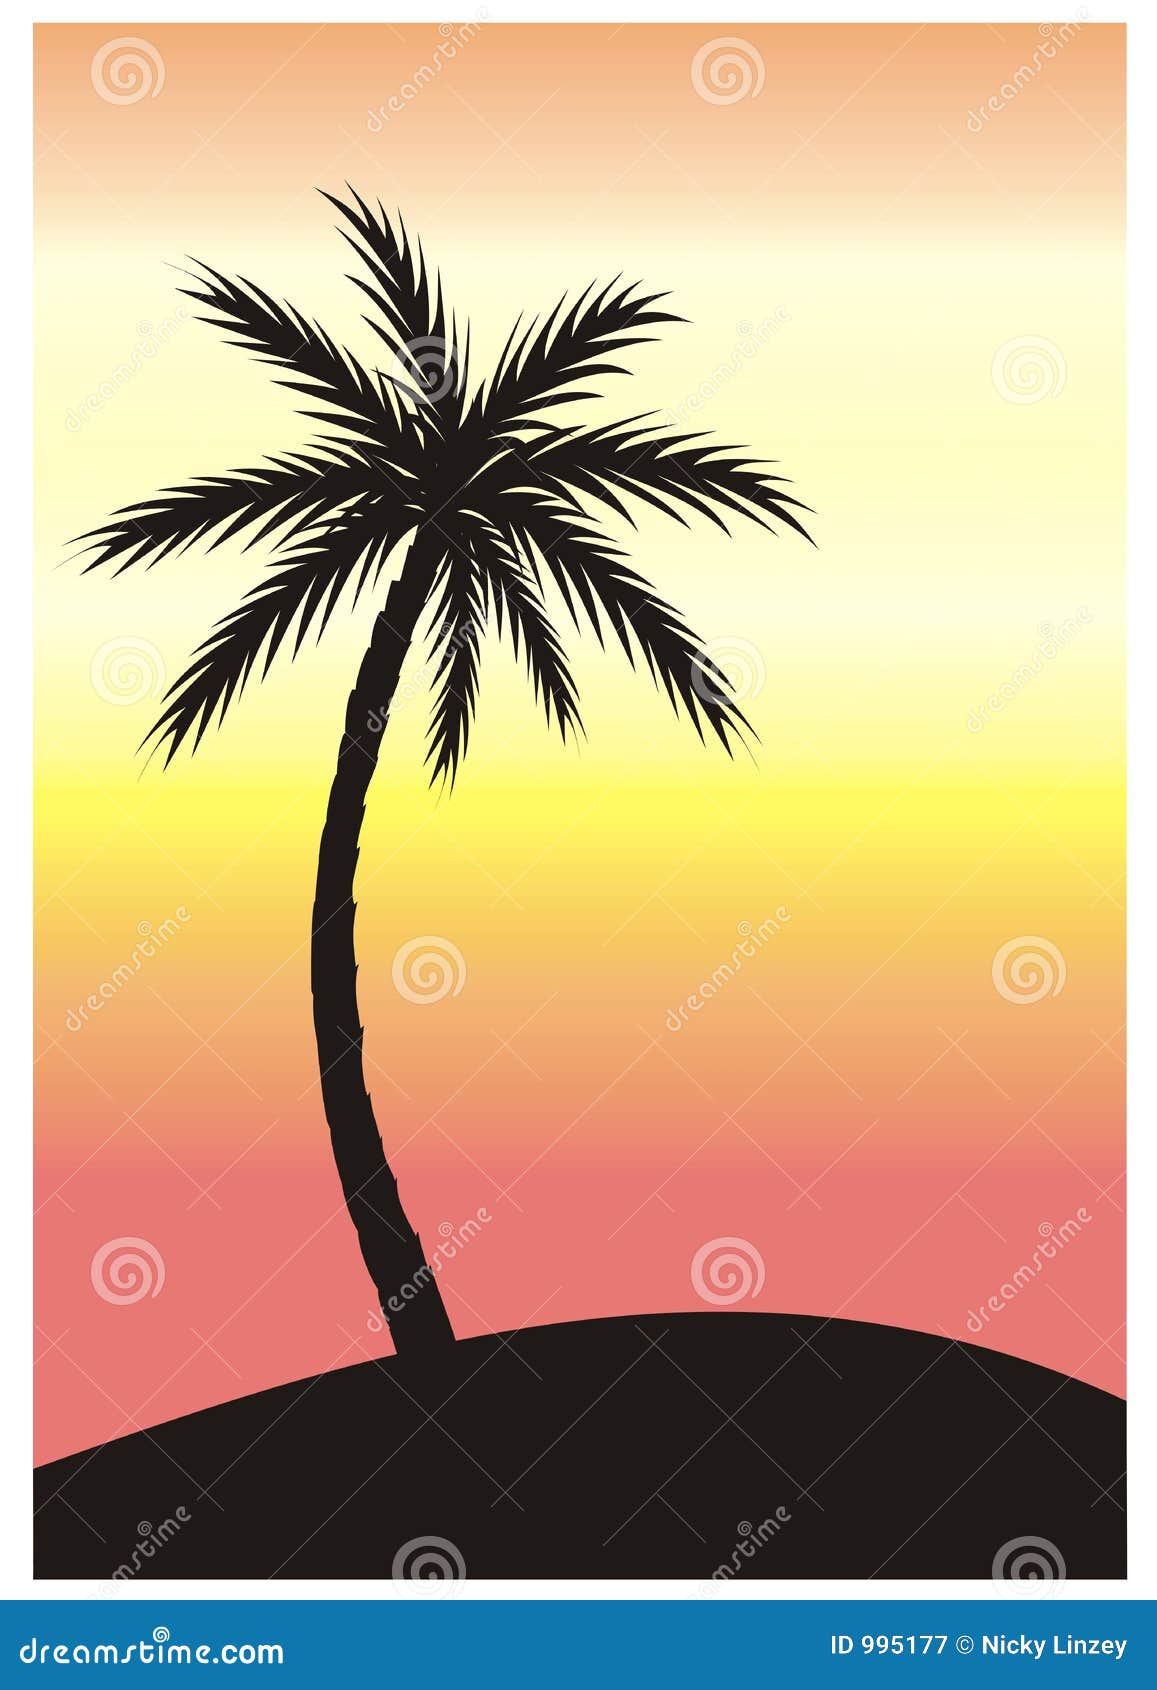 Palm trees stock illustration. Illustration of life, icon - 31122802